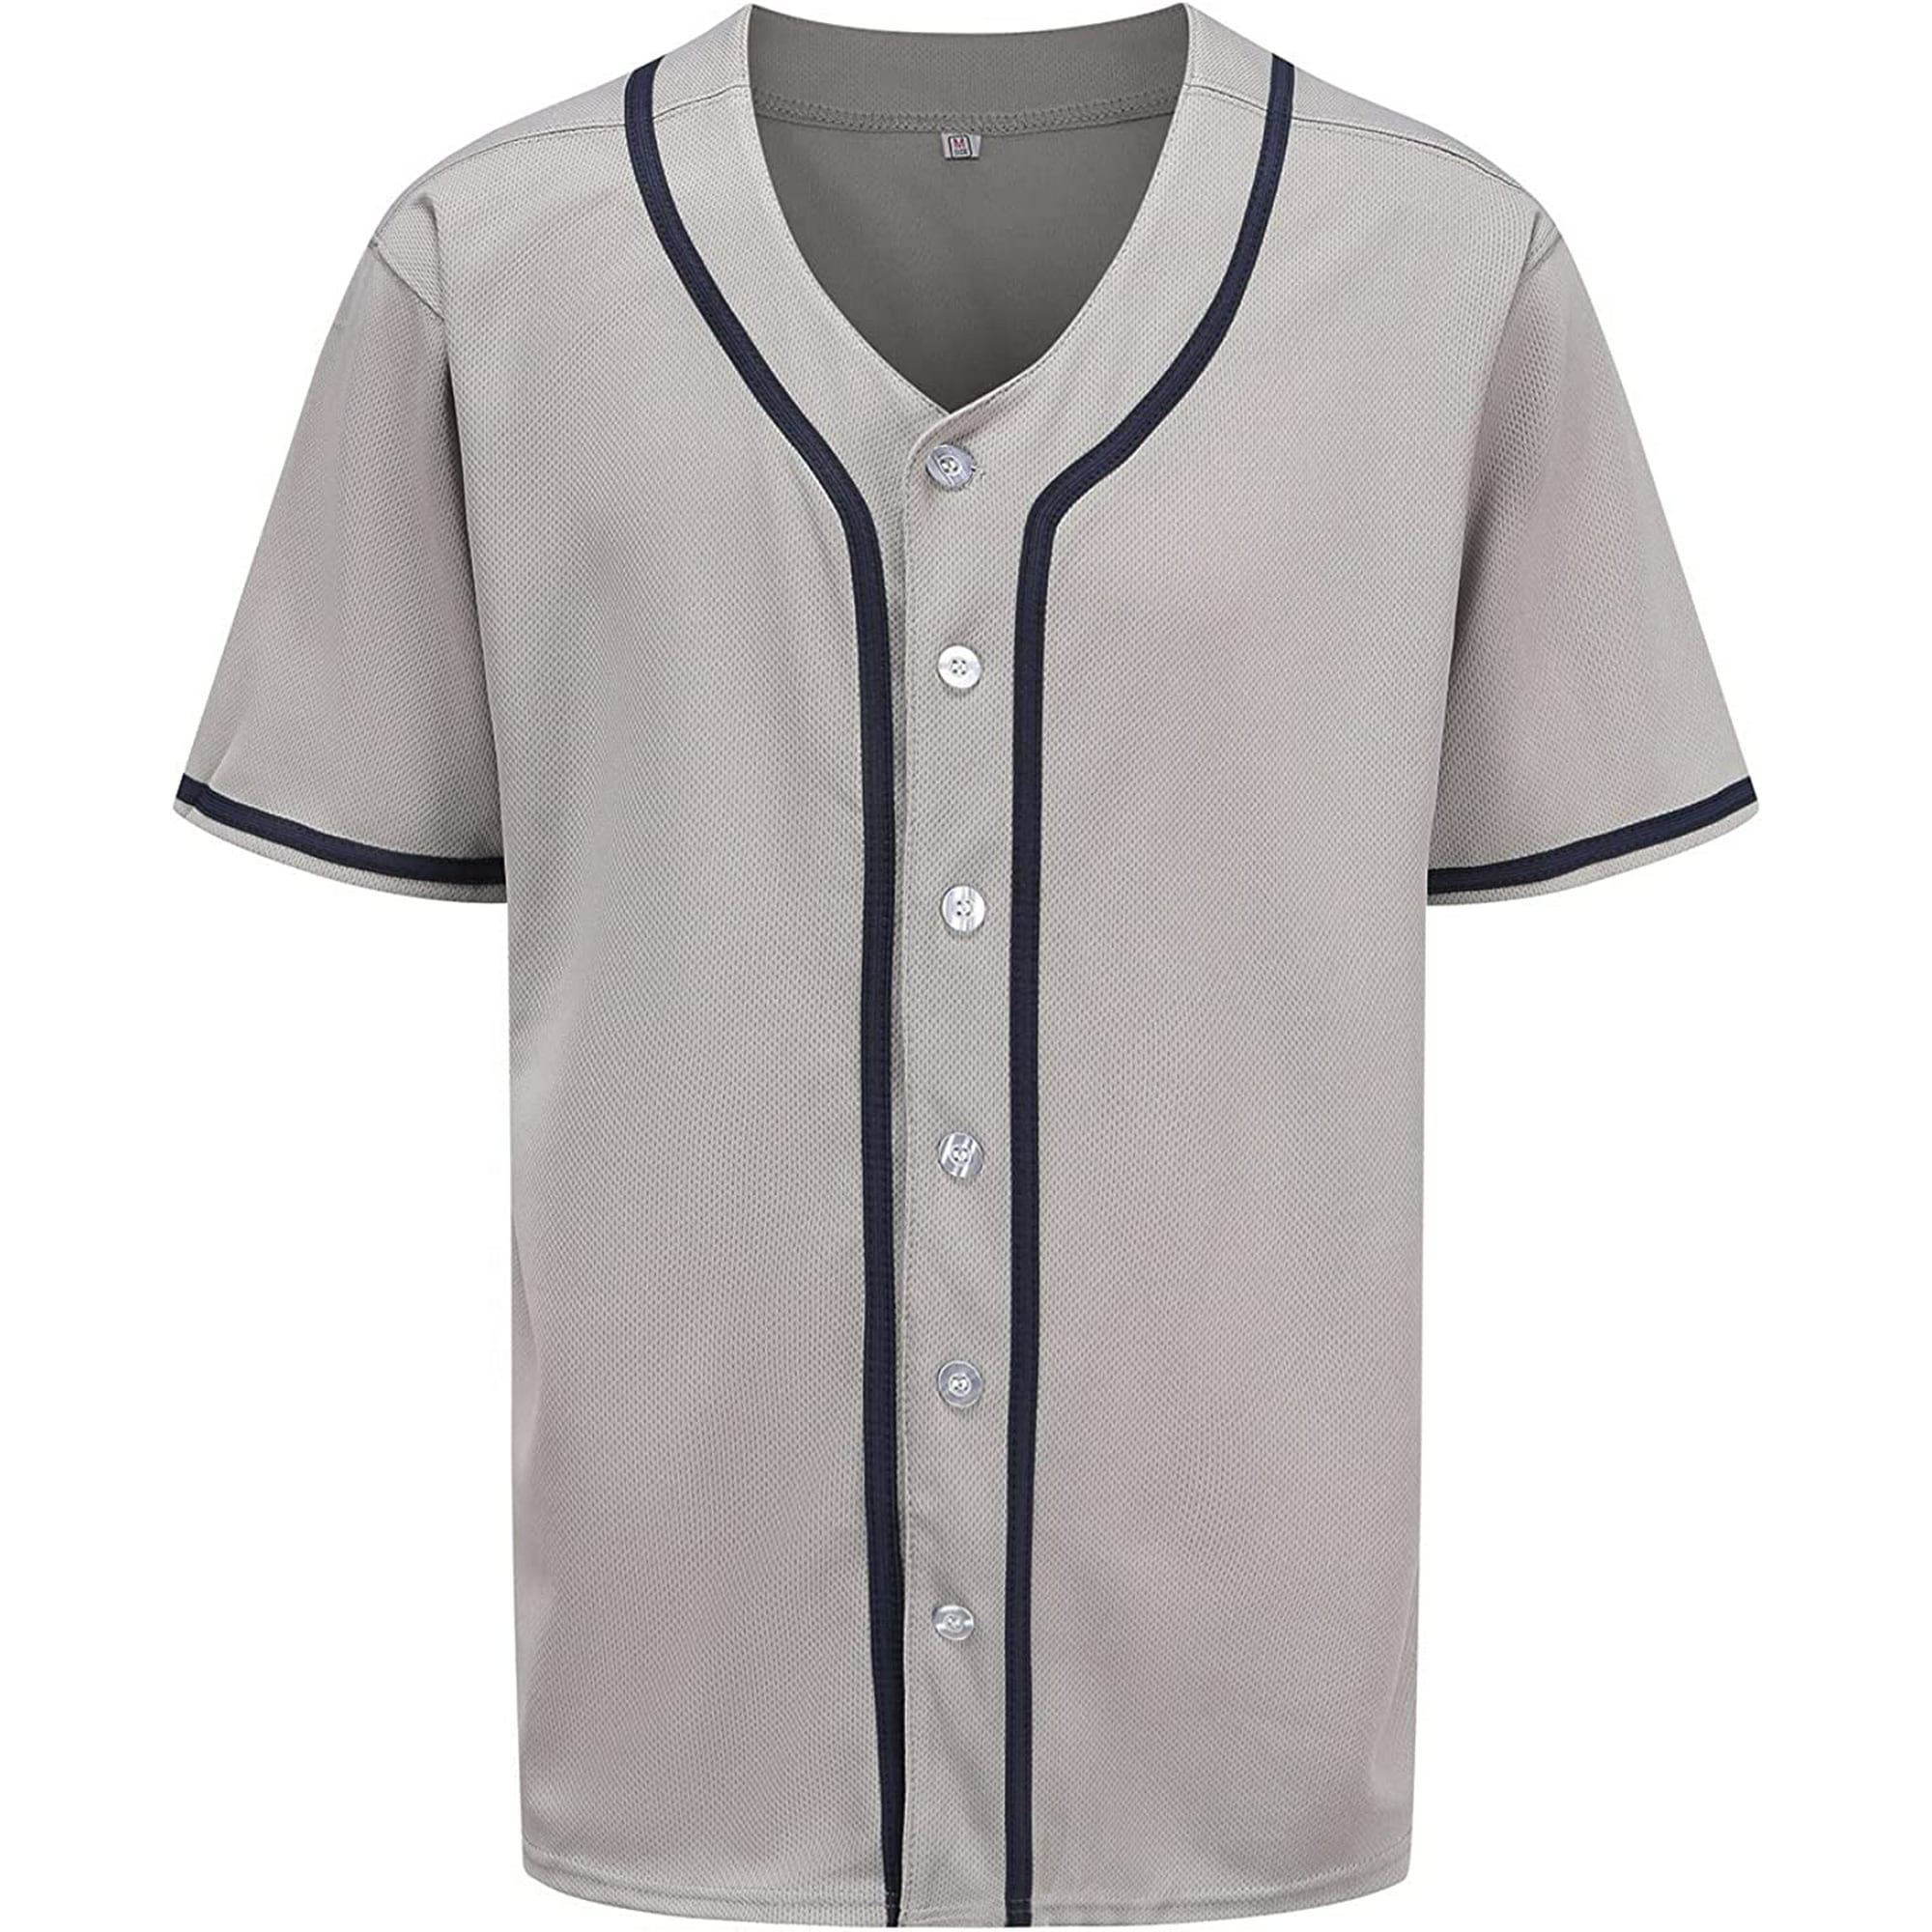 Youi-gifts Mens Button Down Baseball Jersey, Blank Softball Team Uniform, Hip Hop Hipster Short Sleeve Active Shirts, Adult Unisex, Size: 3XL, Gray